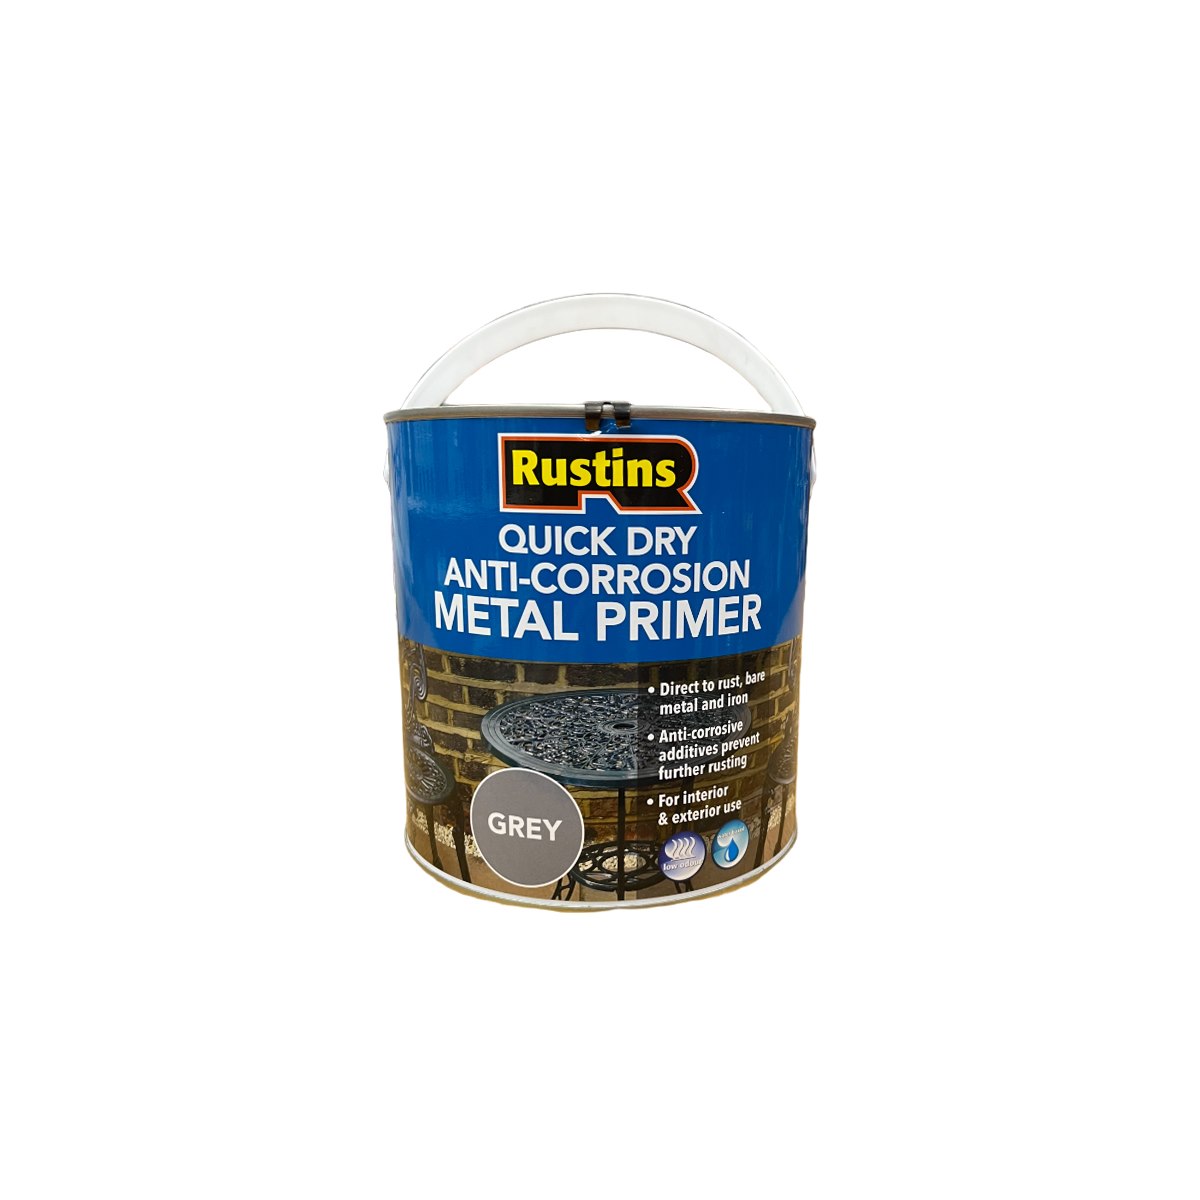 Rustins Quick Dry Anti-Corrosion Metal Primer Grey 2.5 Litre